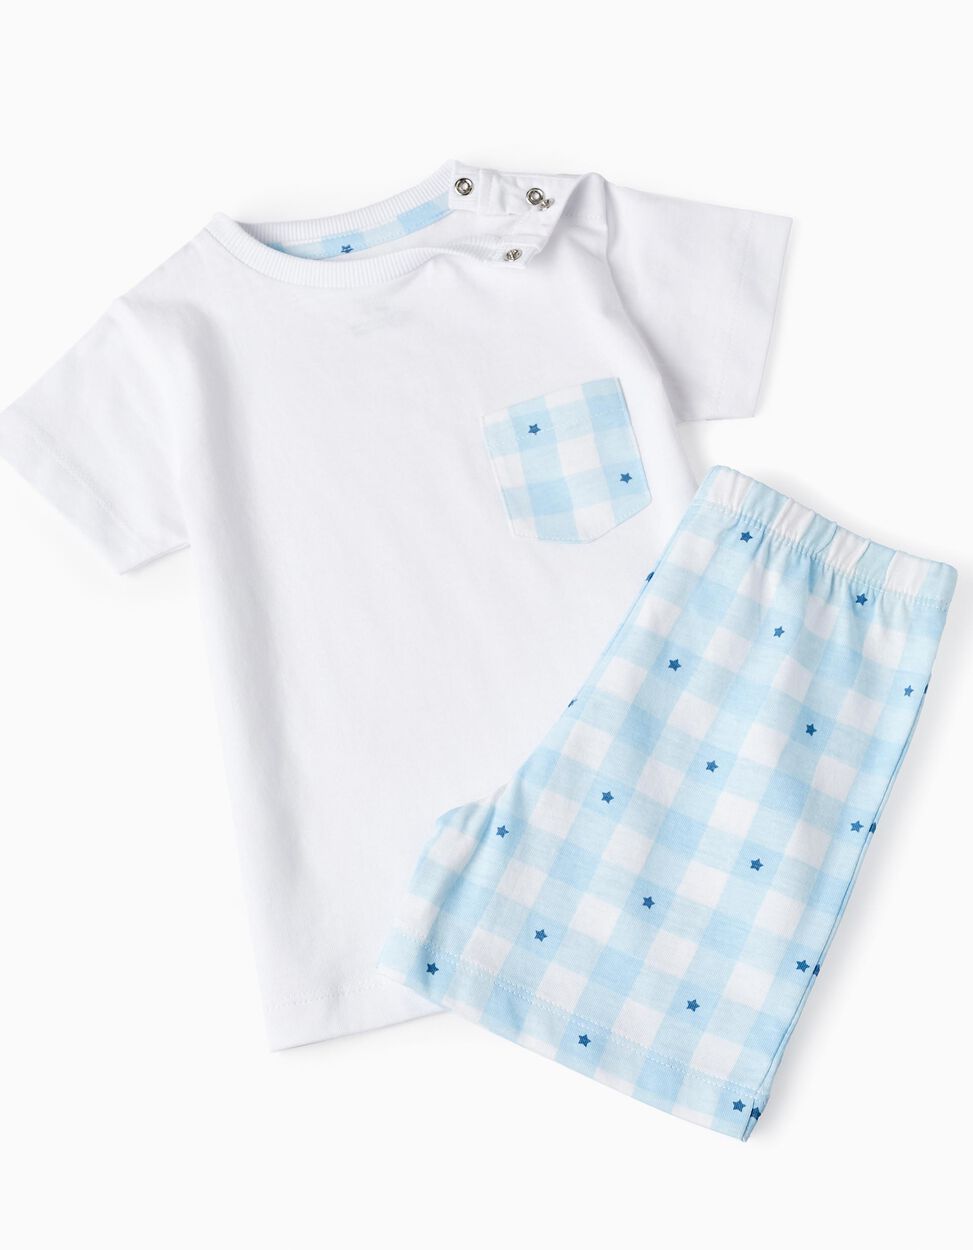 Buy Online Pyjama in Cotton for Baby Boys 'Stars', White/Blue